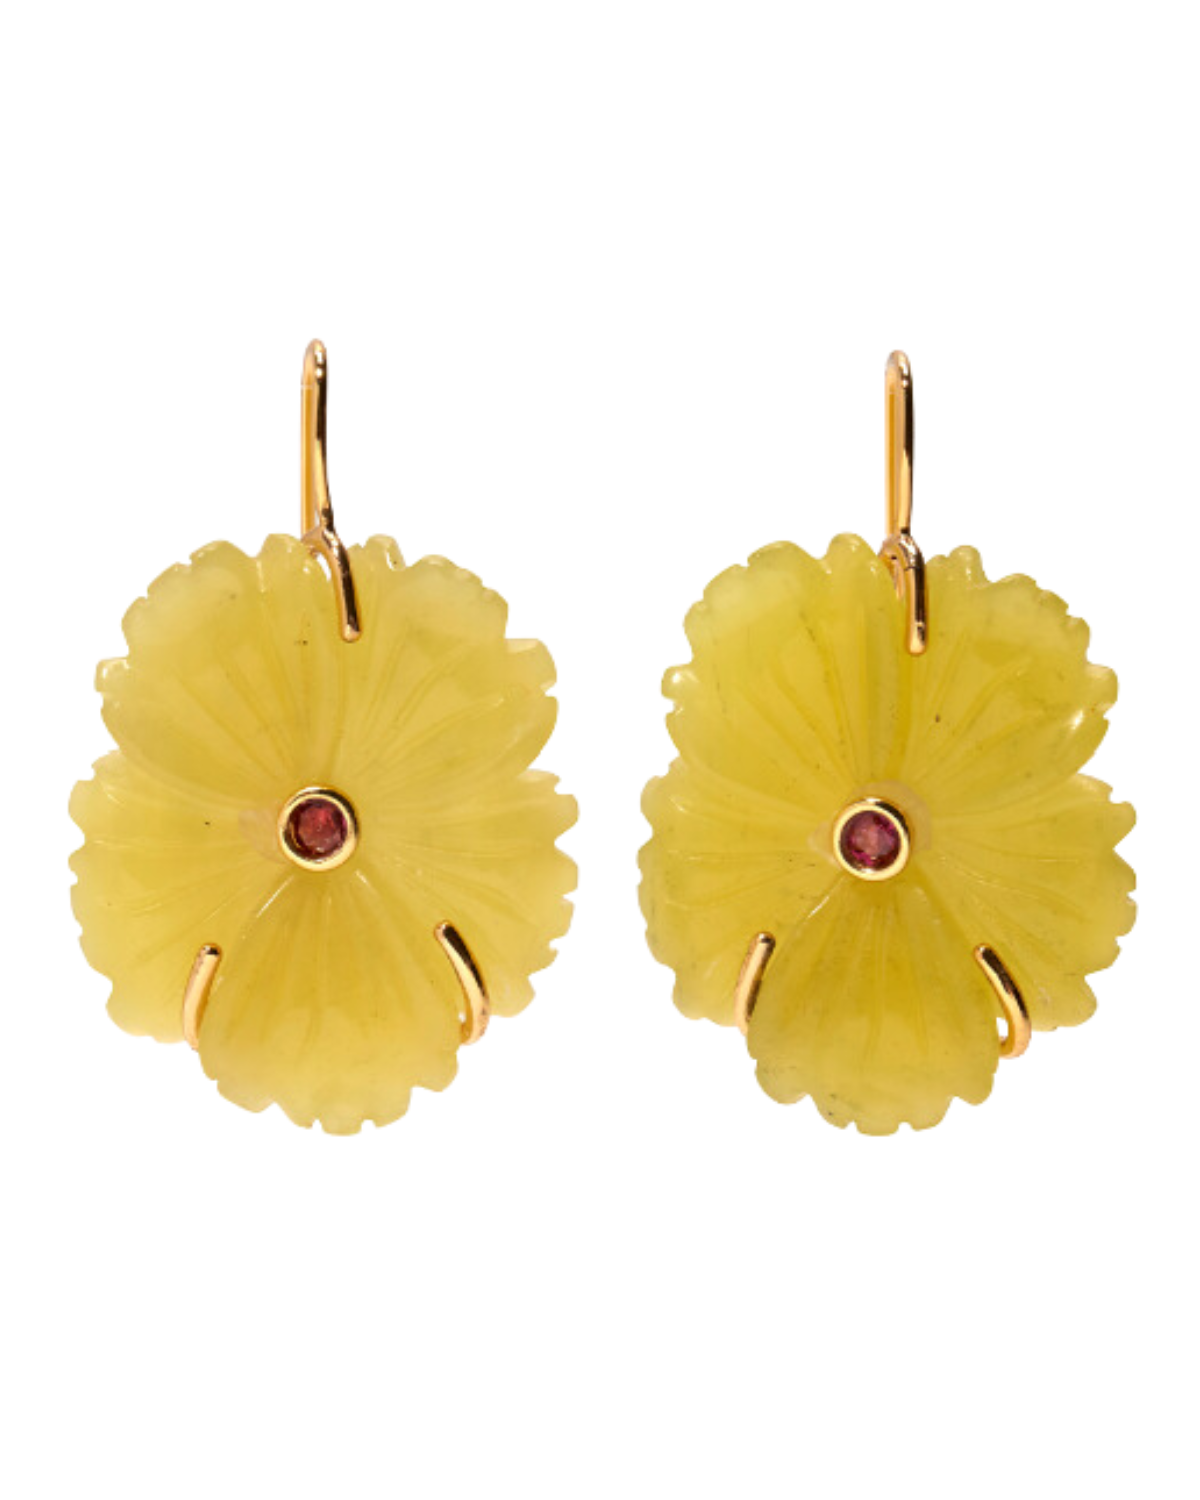 New Bloom Earrings (Canary)